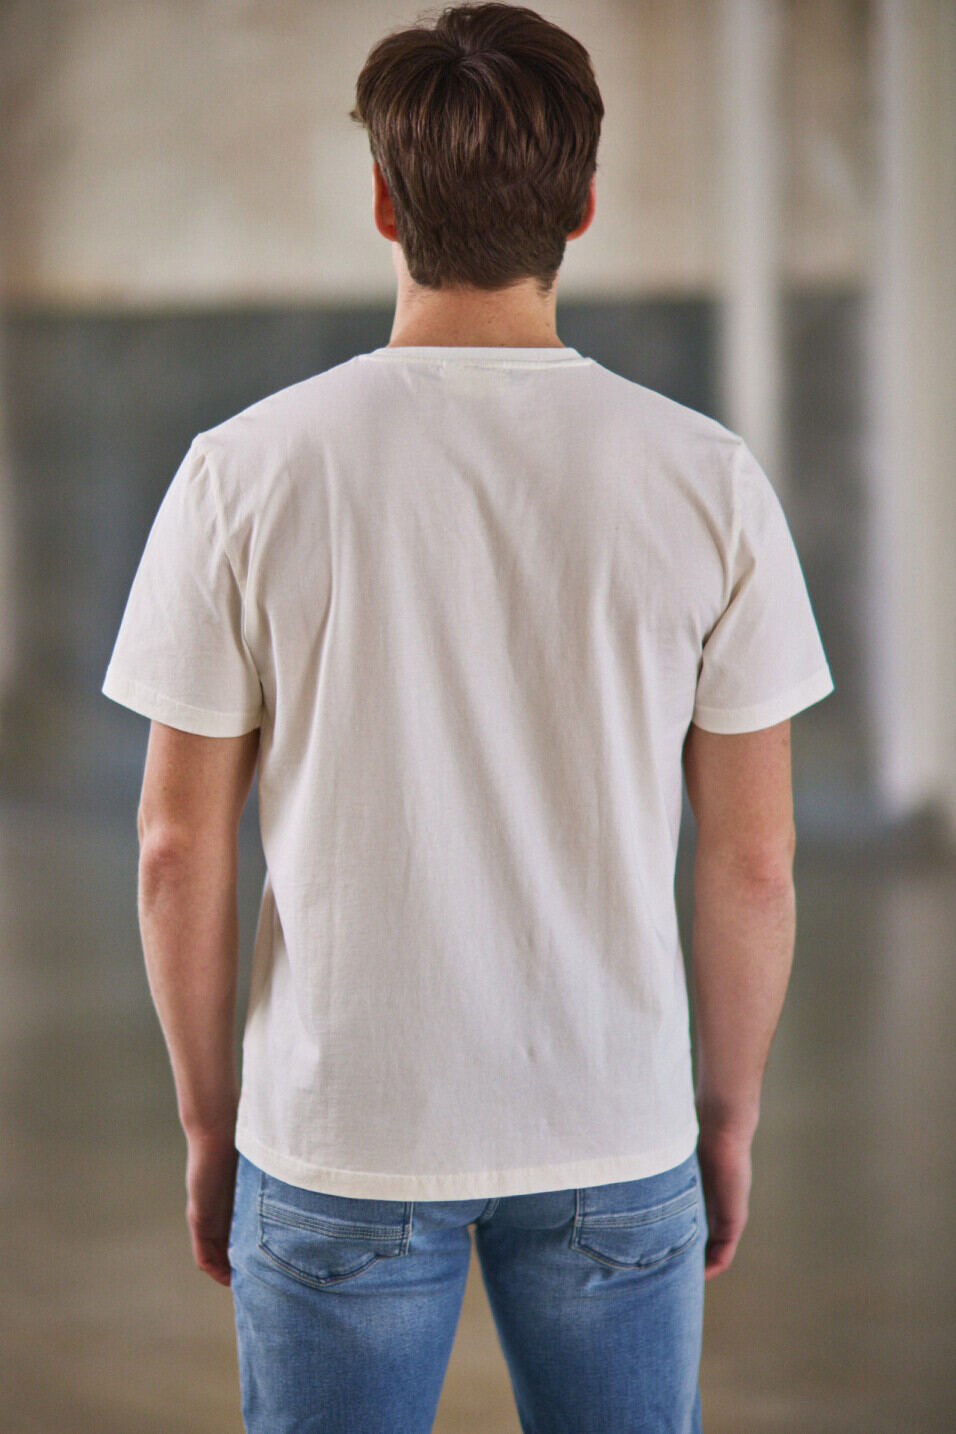 Gerades T-Shirt Man Ivander Chill Egret | Freeman T. Porter